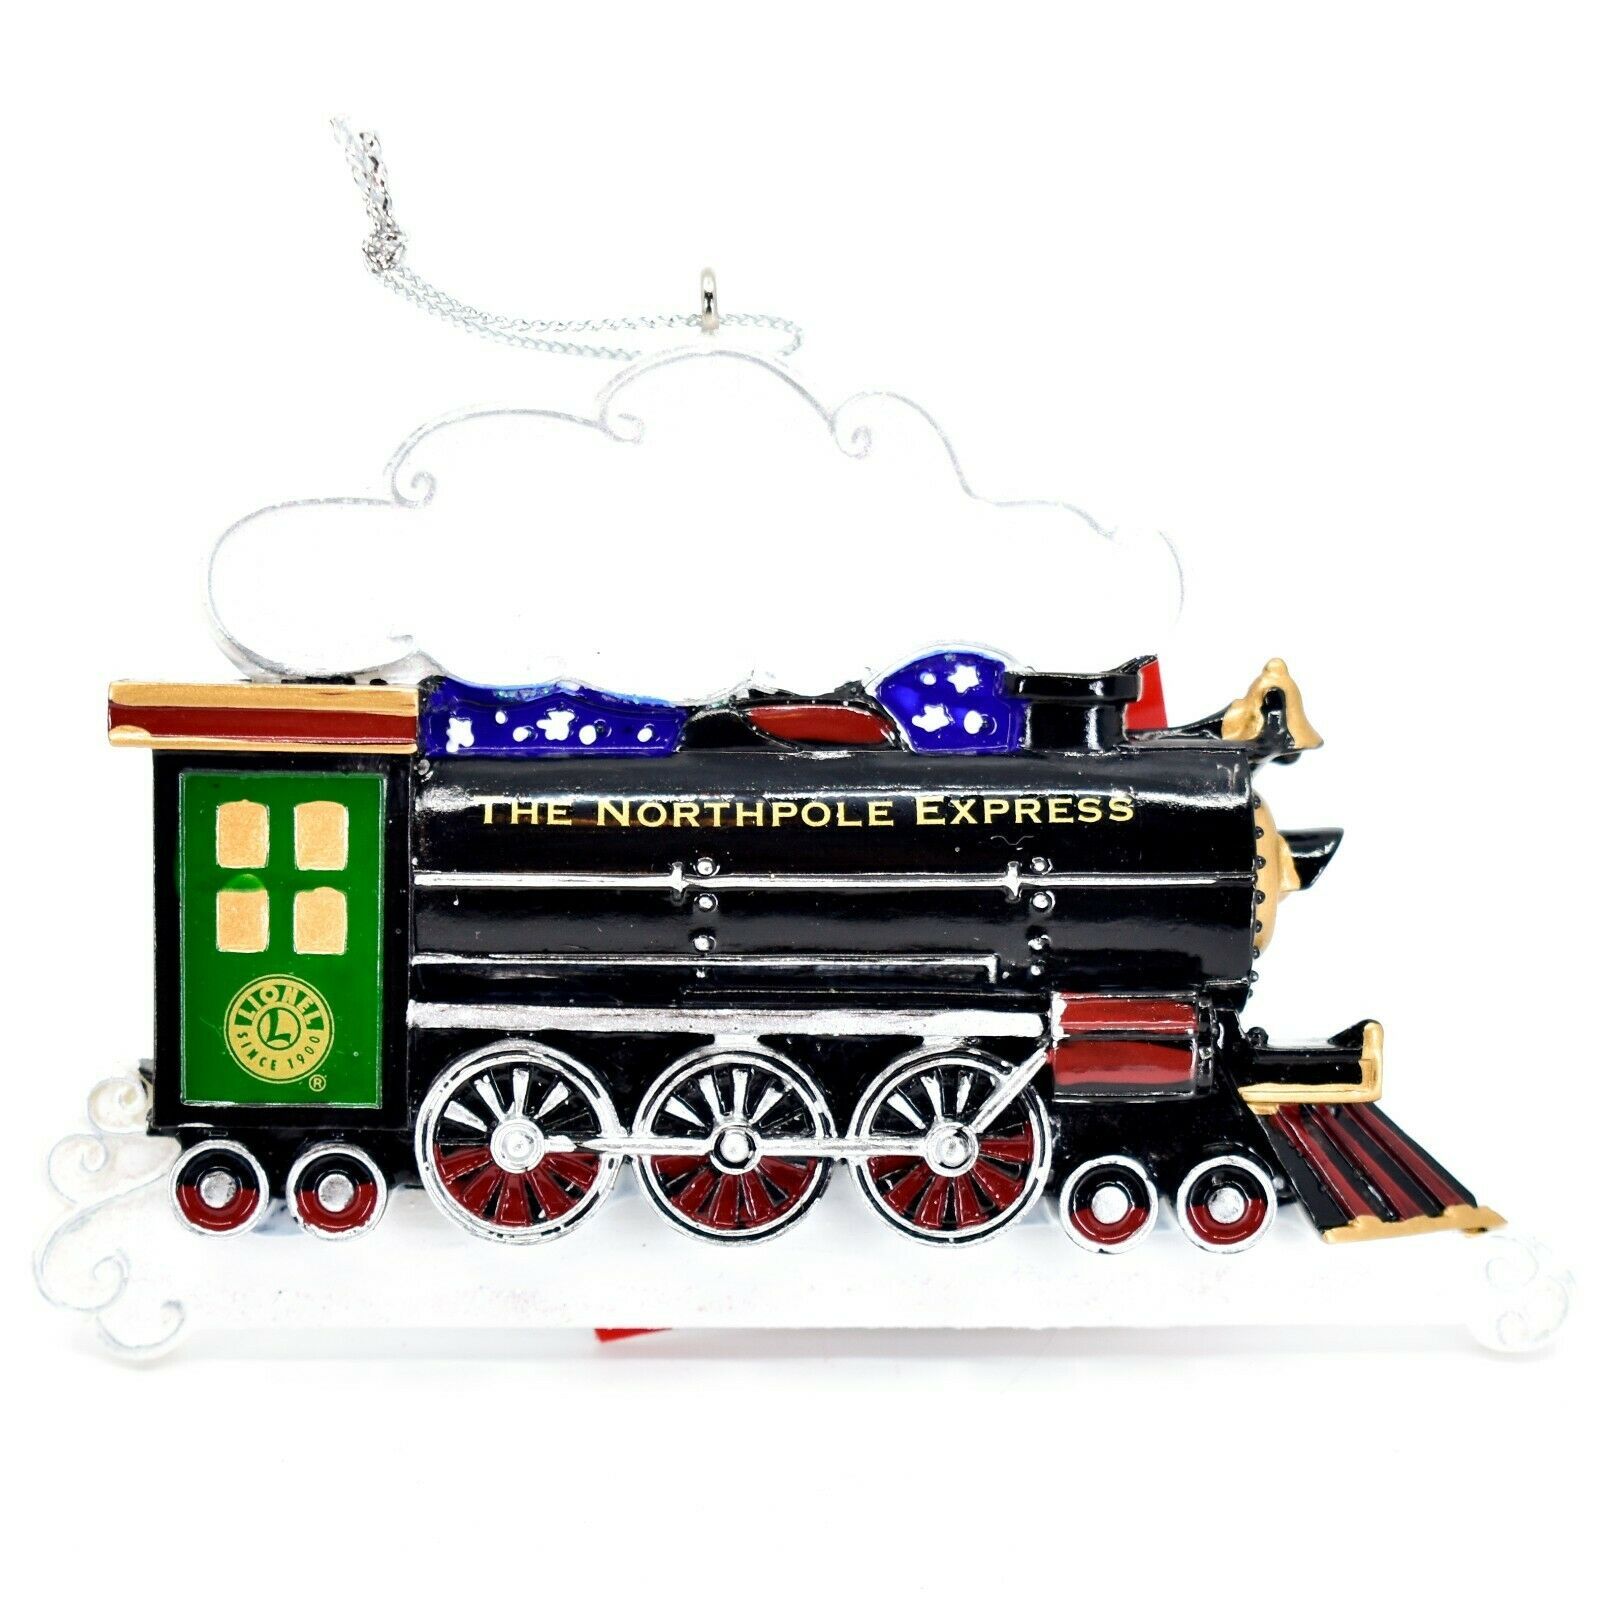 Kurt S. Adler Lionel Northpole Express Locomotive Train Christmas Ornament - $15.83